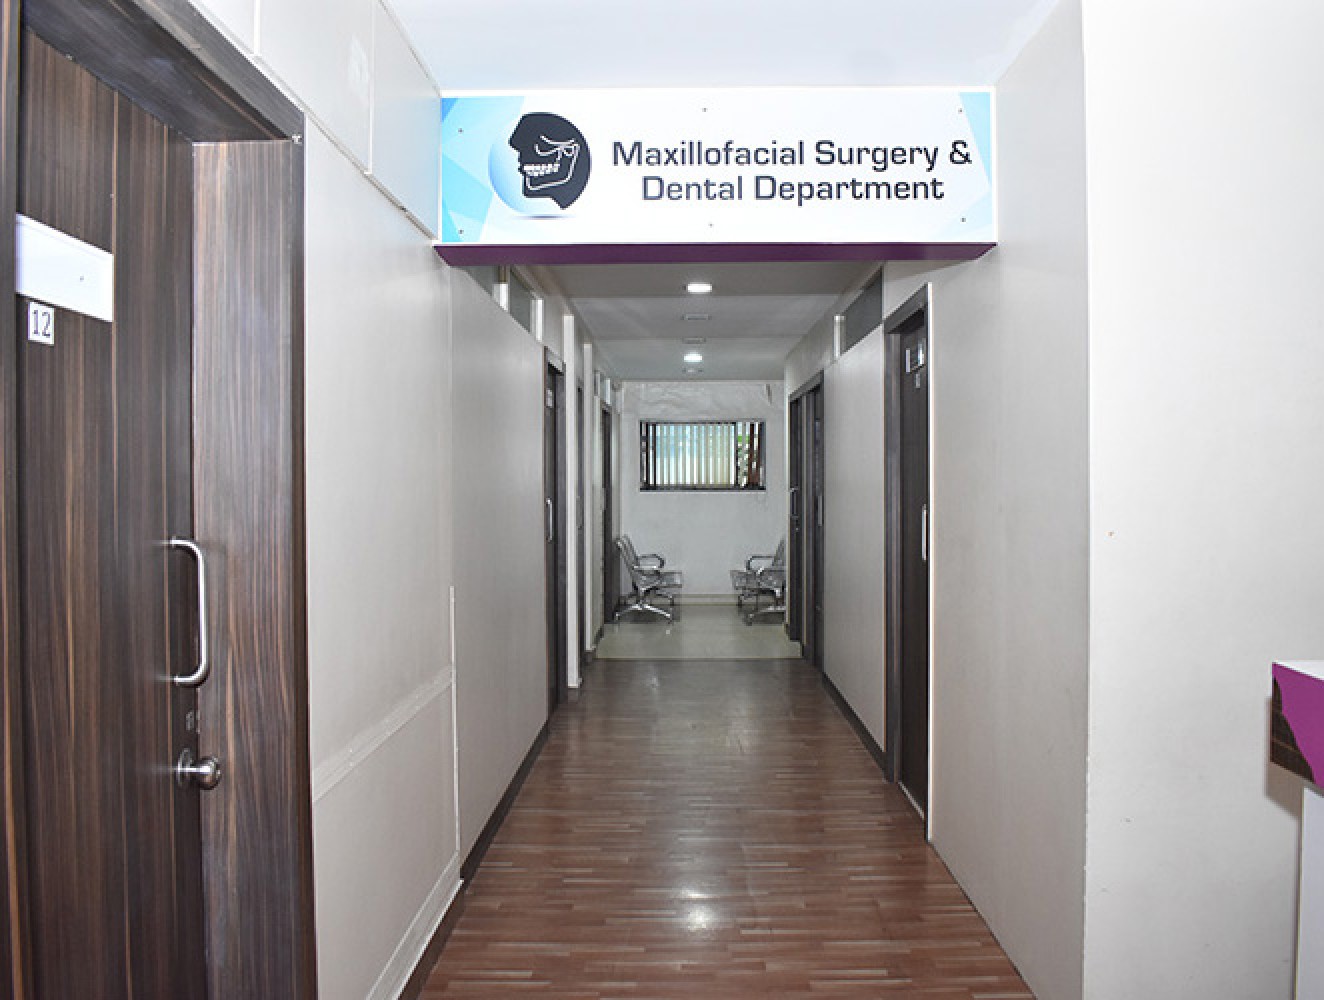 Deccan Hardikar Hospital - Sushrut Medical Care And Research Society-photo